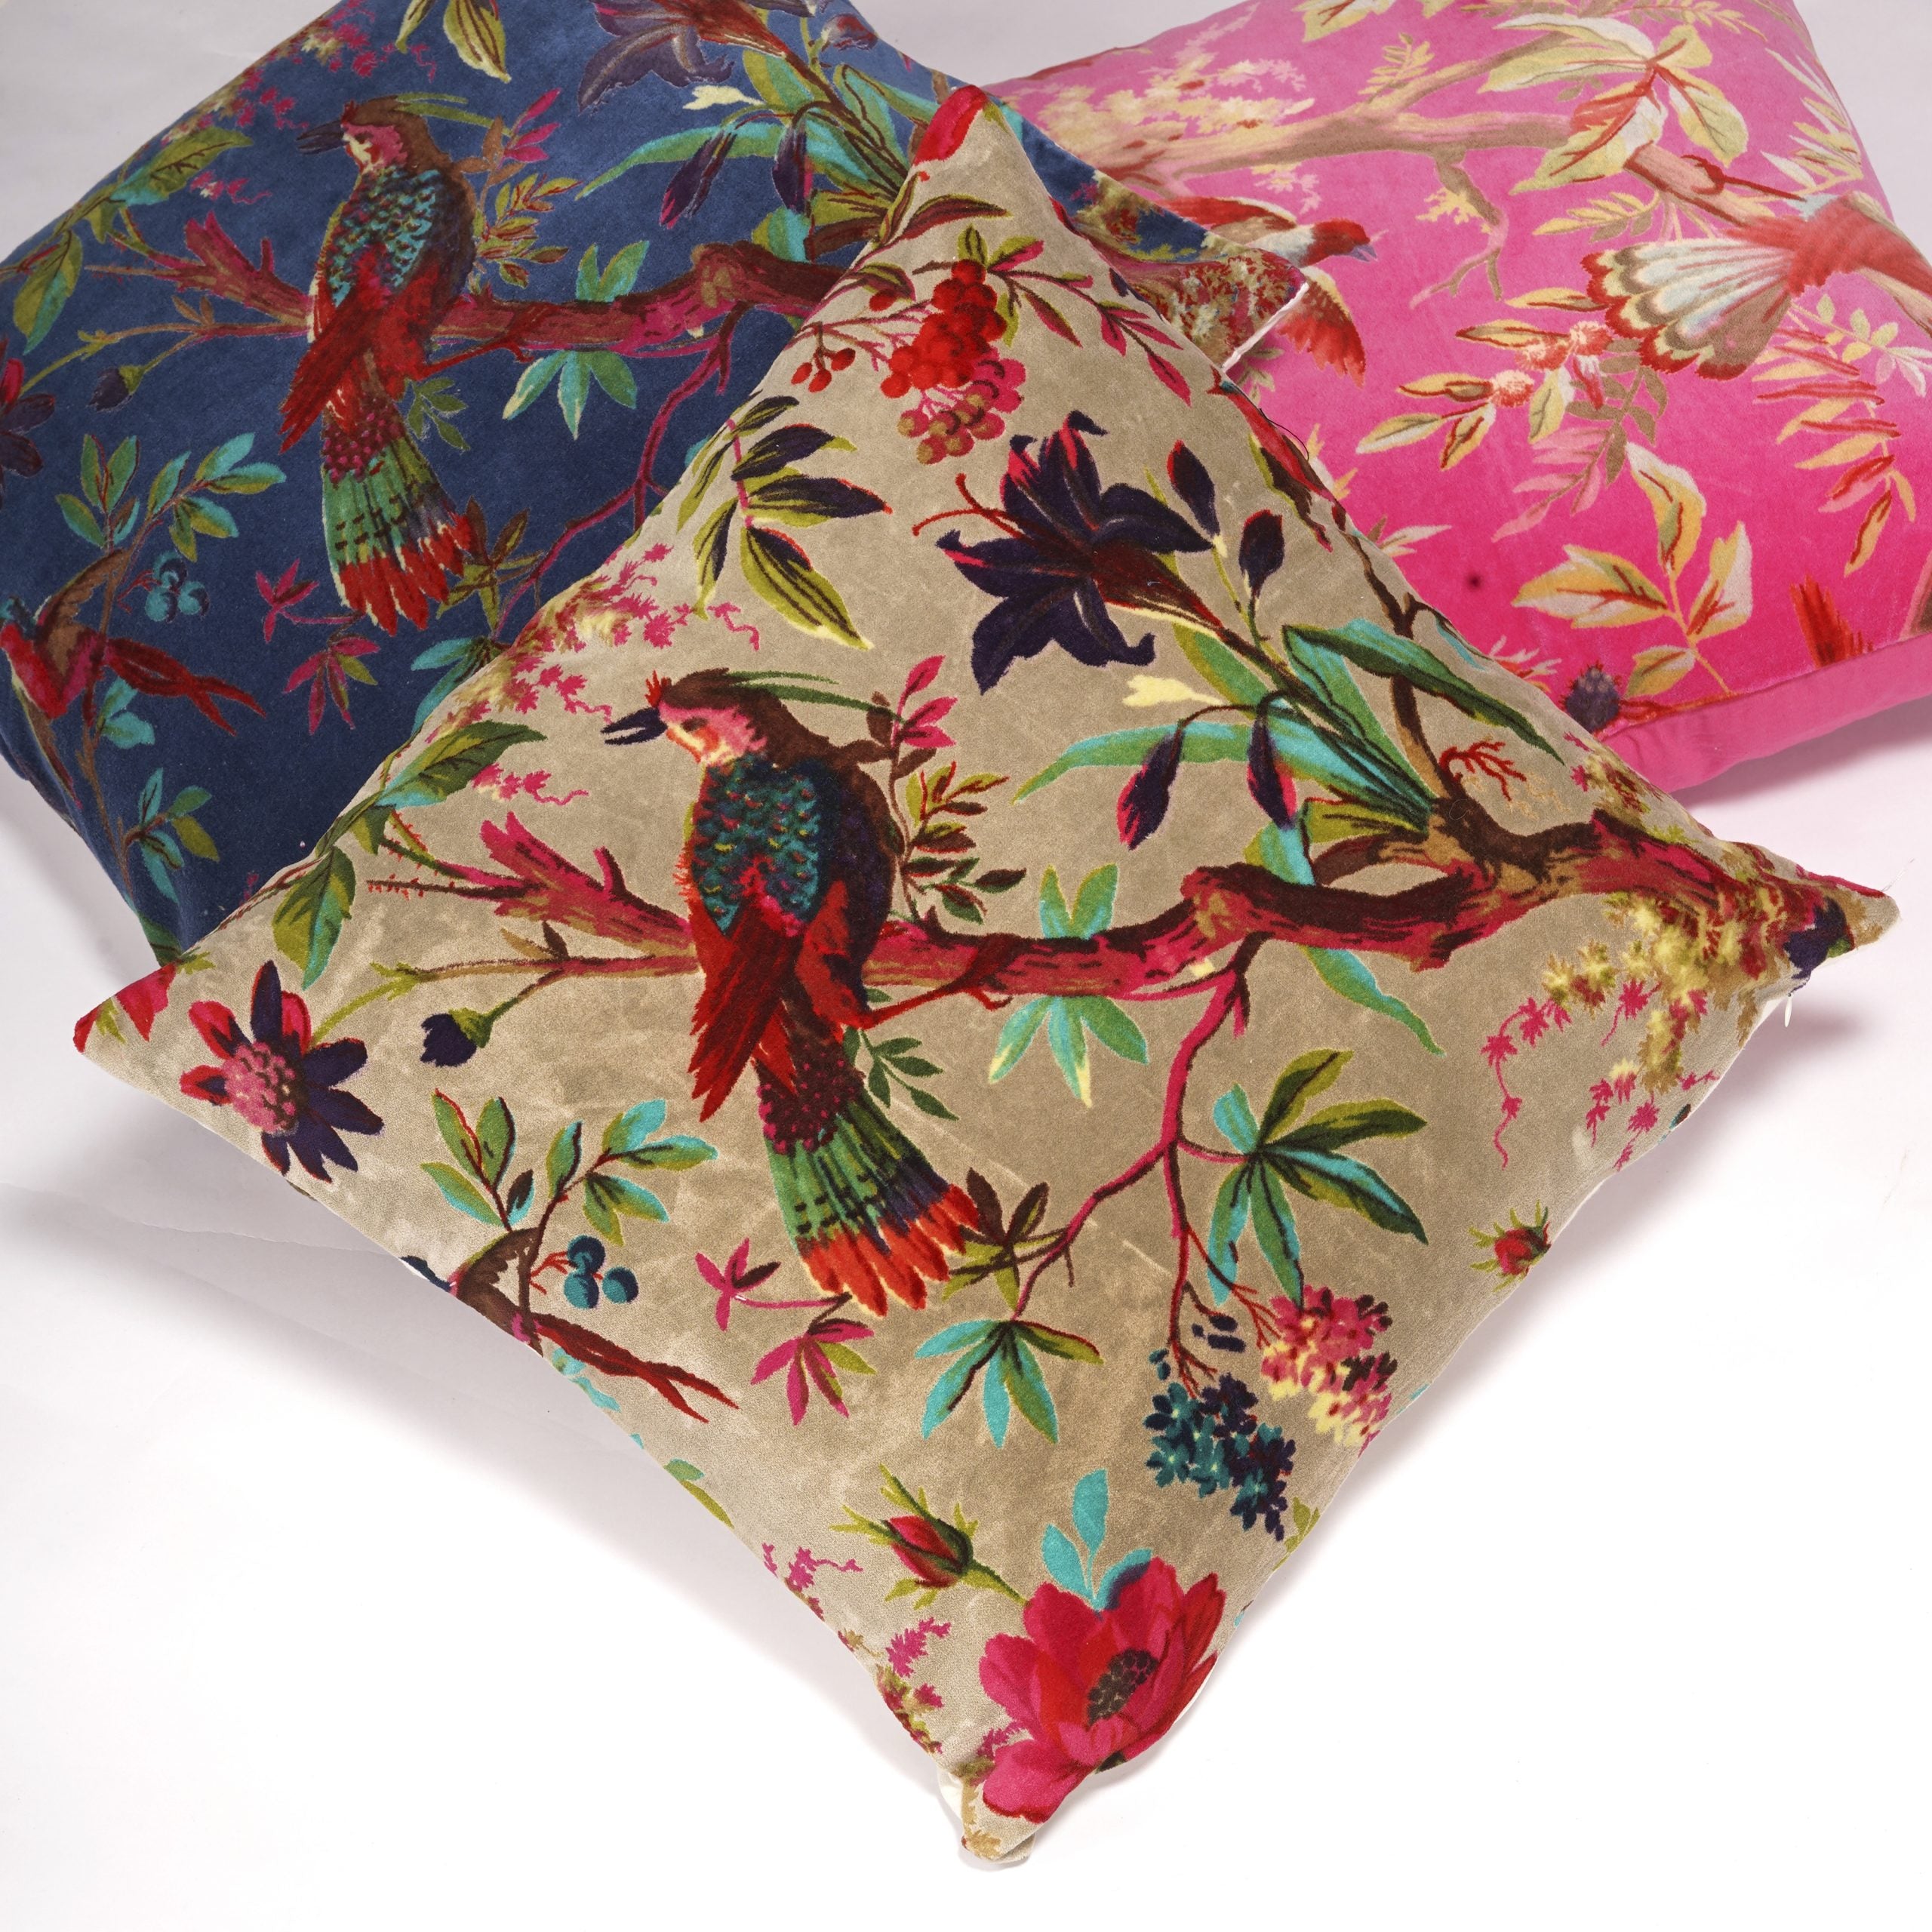 'Botanical Harmony' 100% Cotton Velvet Cushion Cover